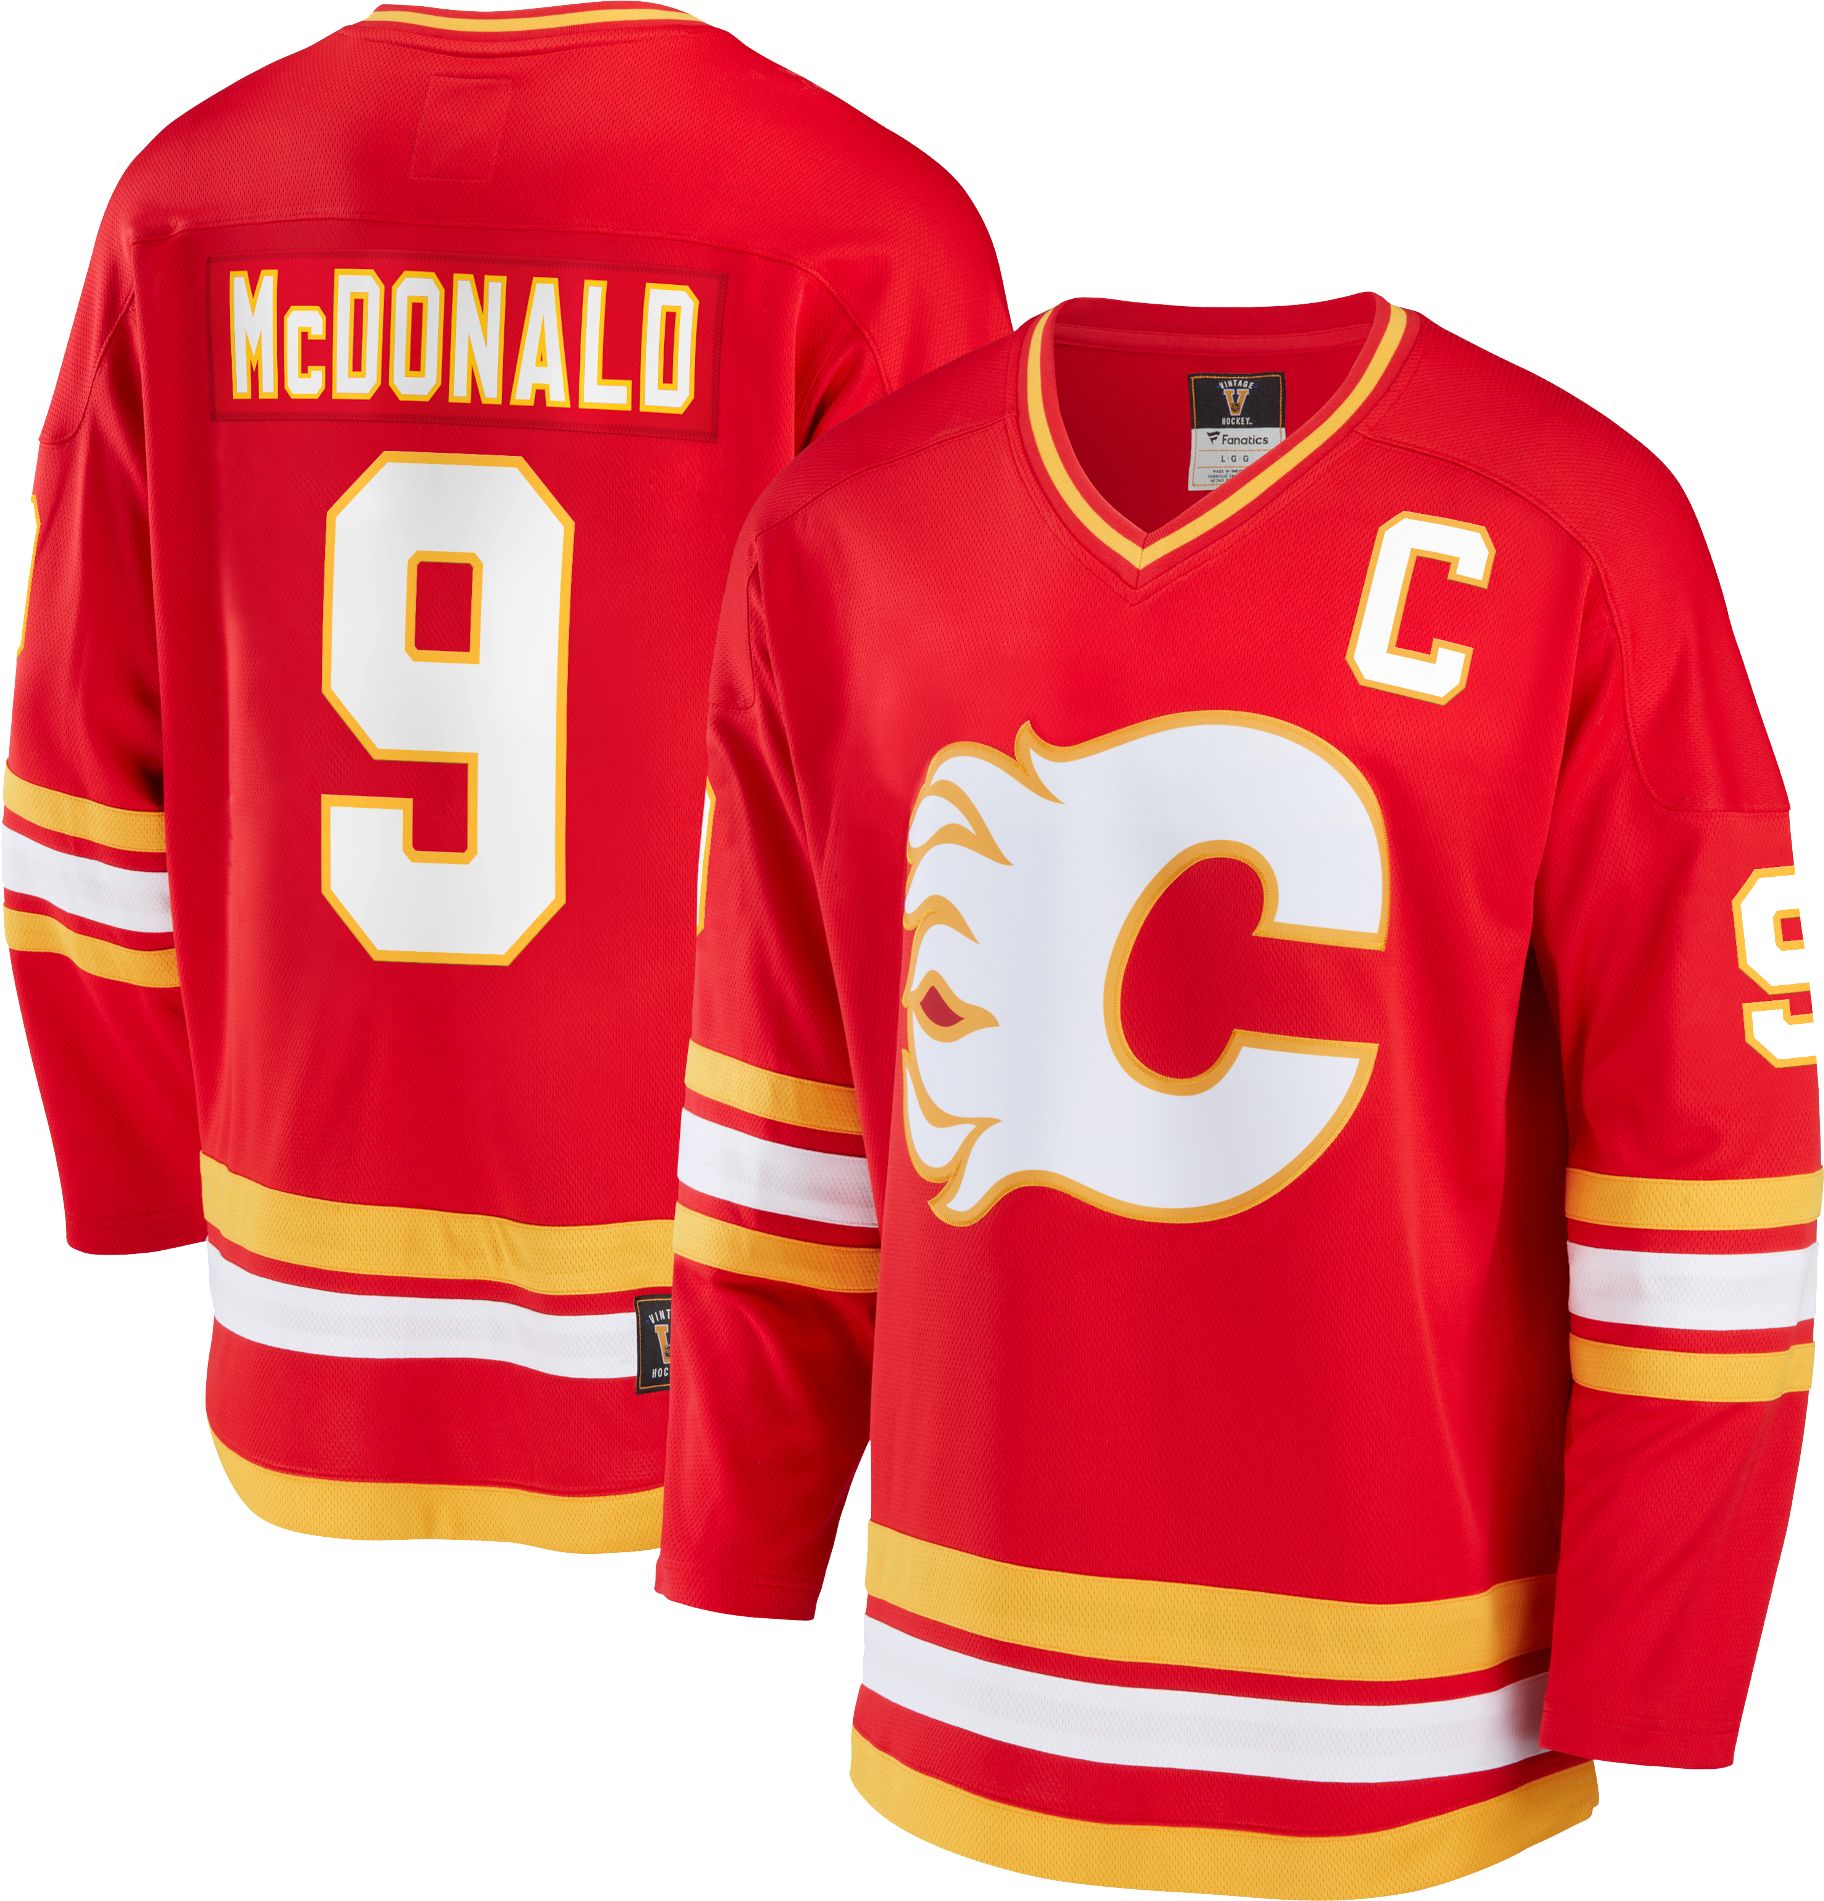 Calgary Flames licensed merchandise